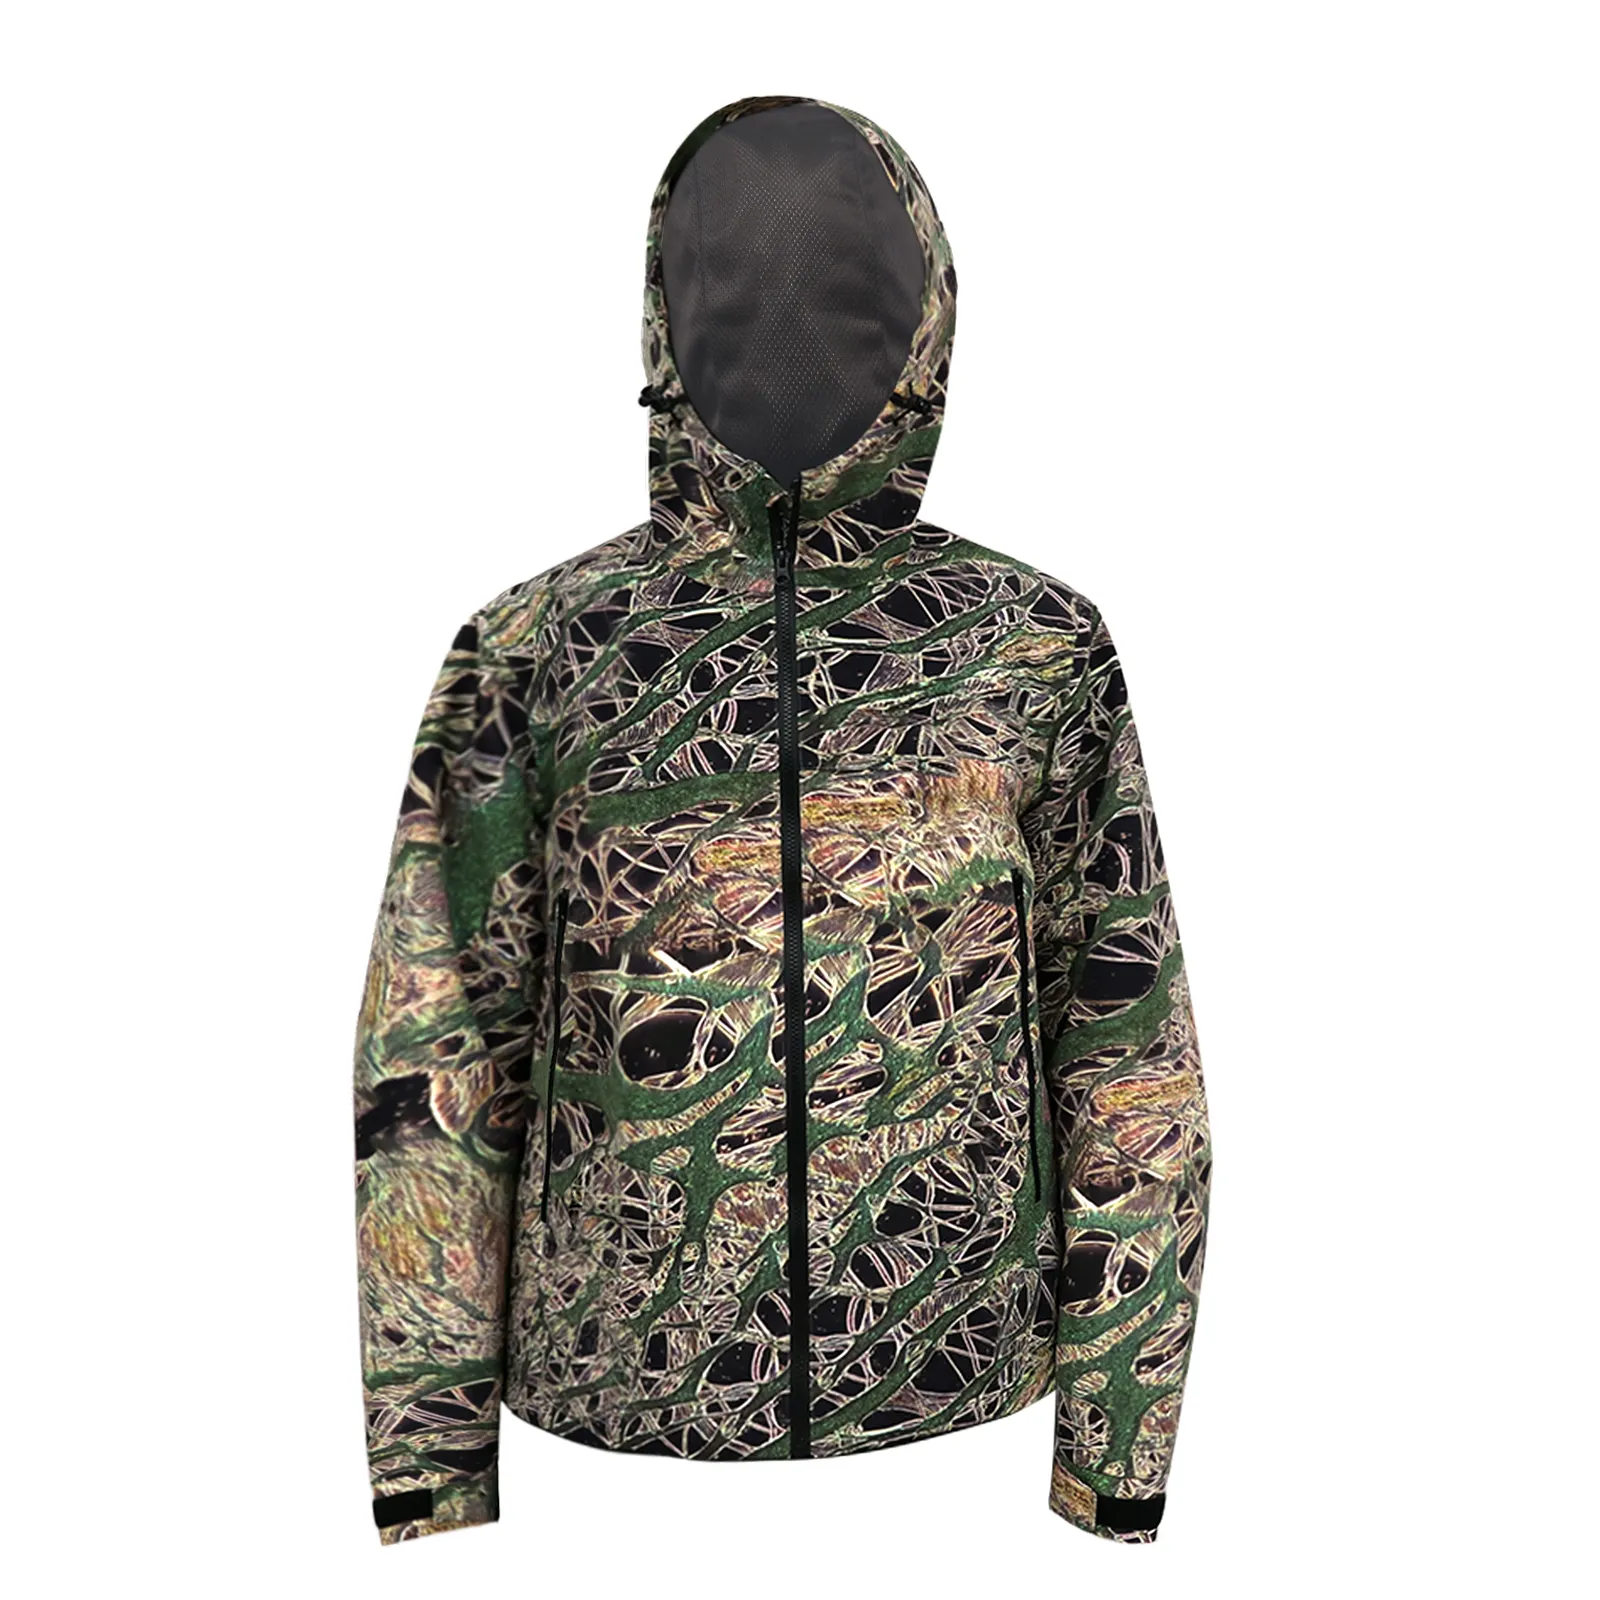 Chaqueta de caza para hombre, ropa de camuflaje, Abrigo con capucha a prueba de viento, impermeable y transpirable, múltiples bolsillos